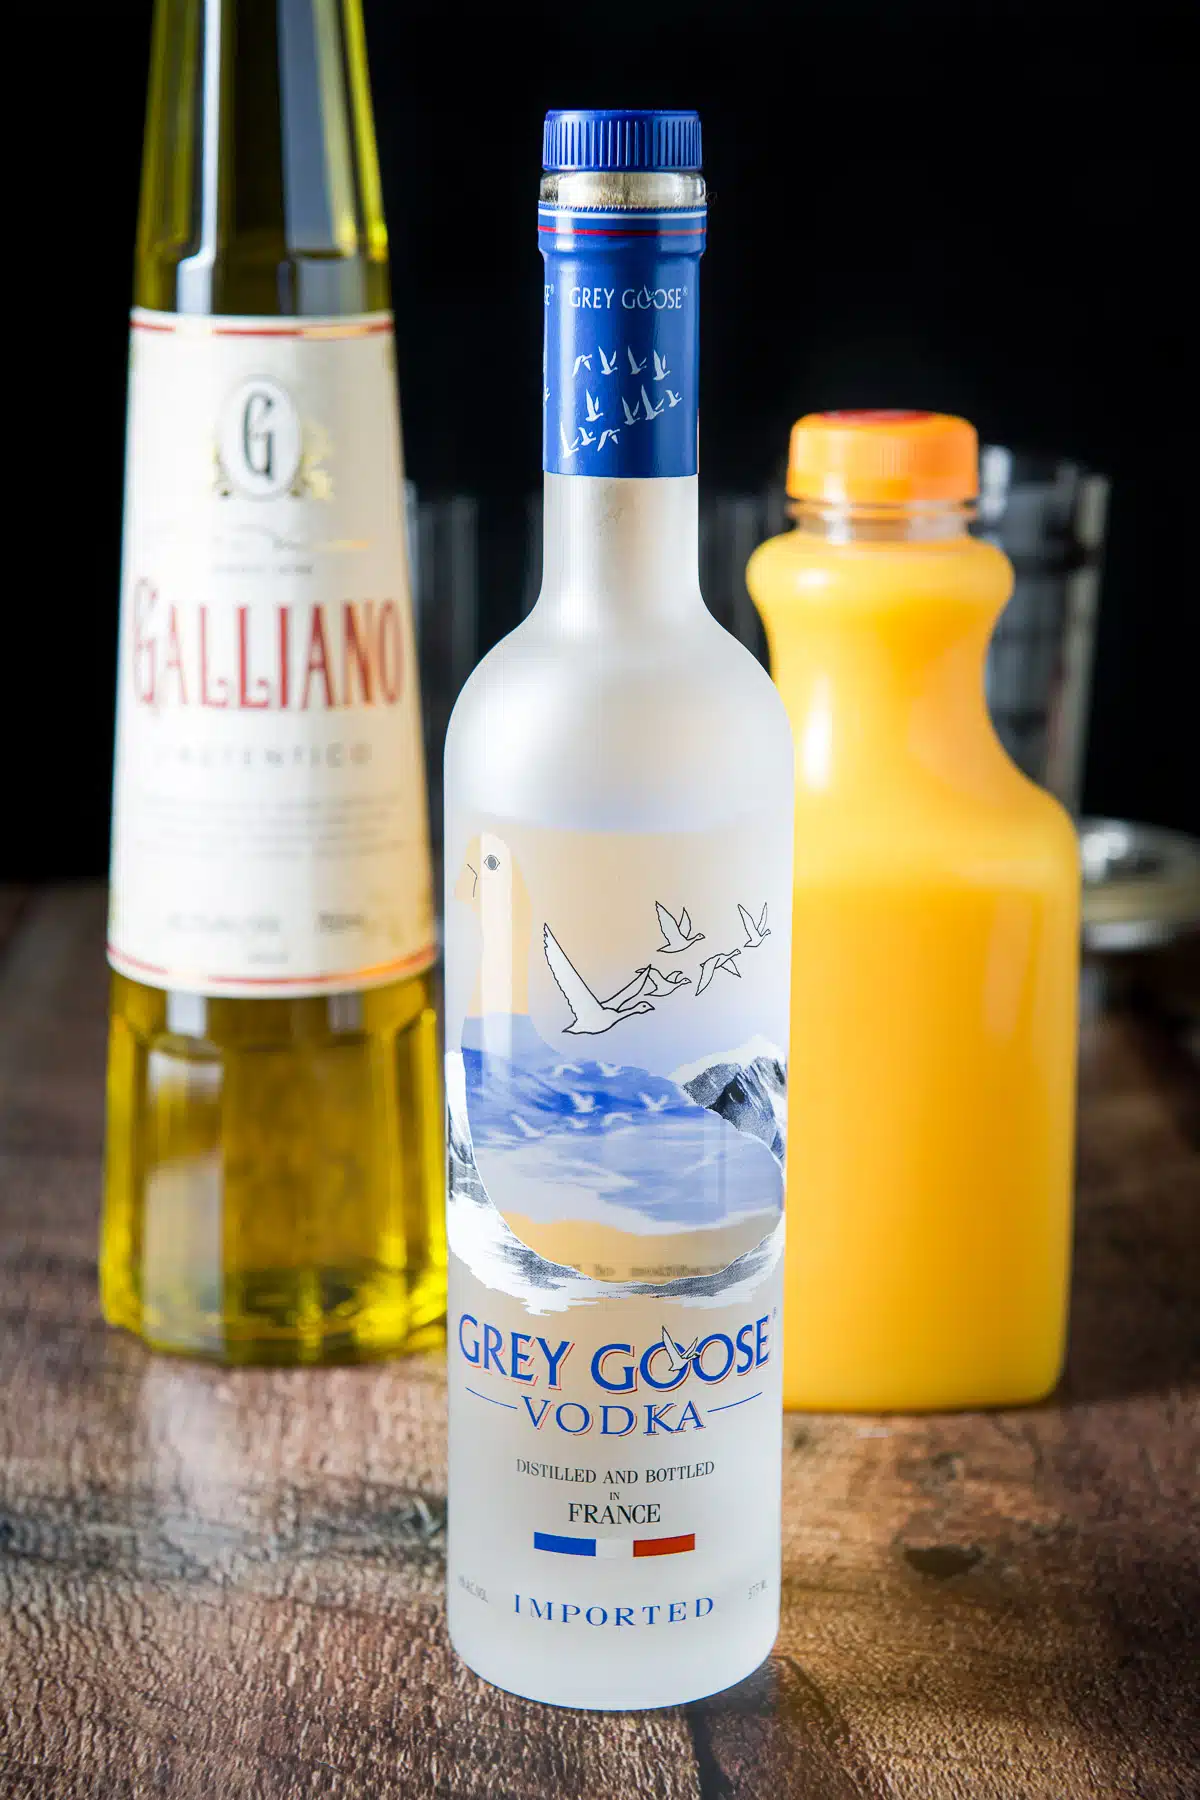 Vodka, orange juice and galliano on a table